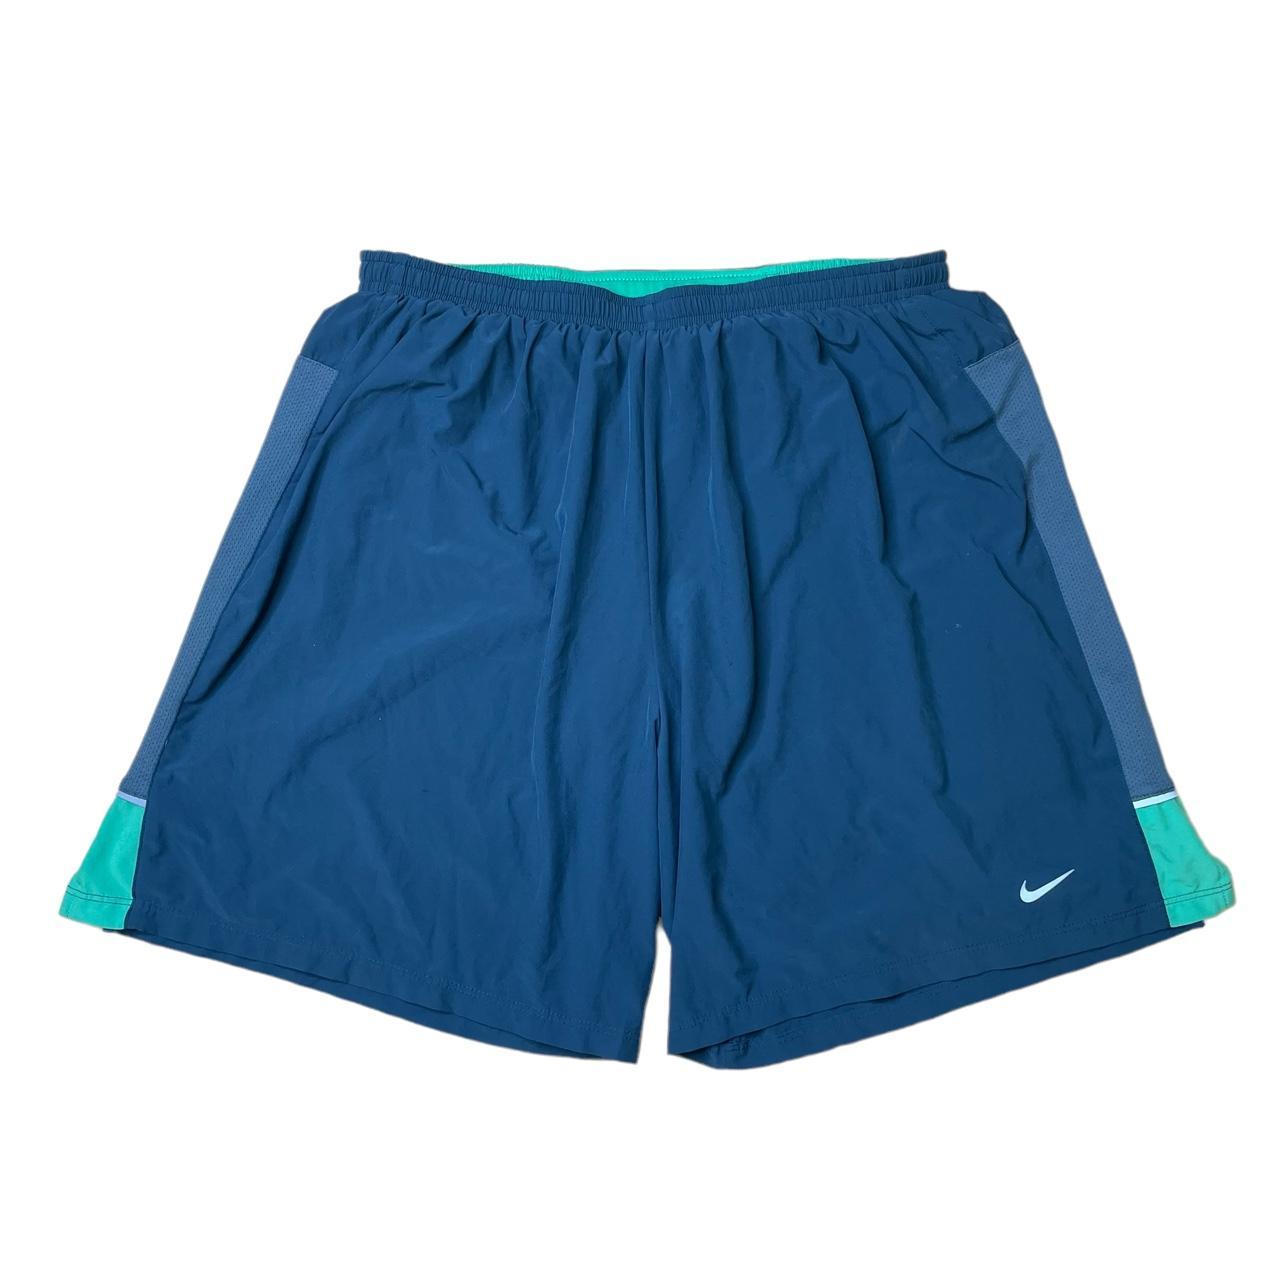 Nike Men's Blue and Green Shorts | Depop